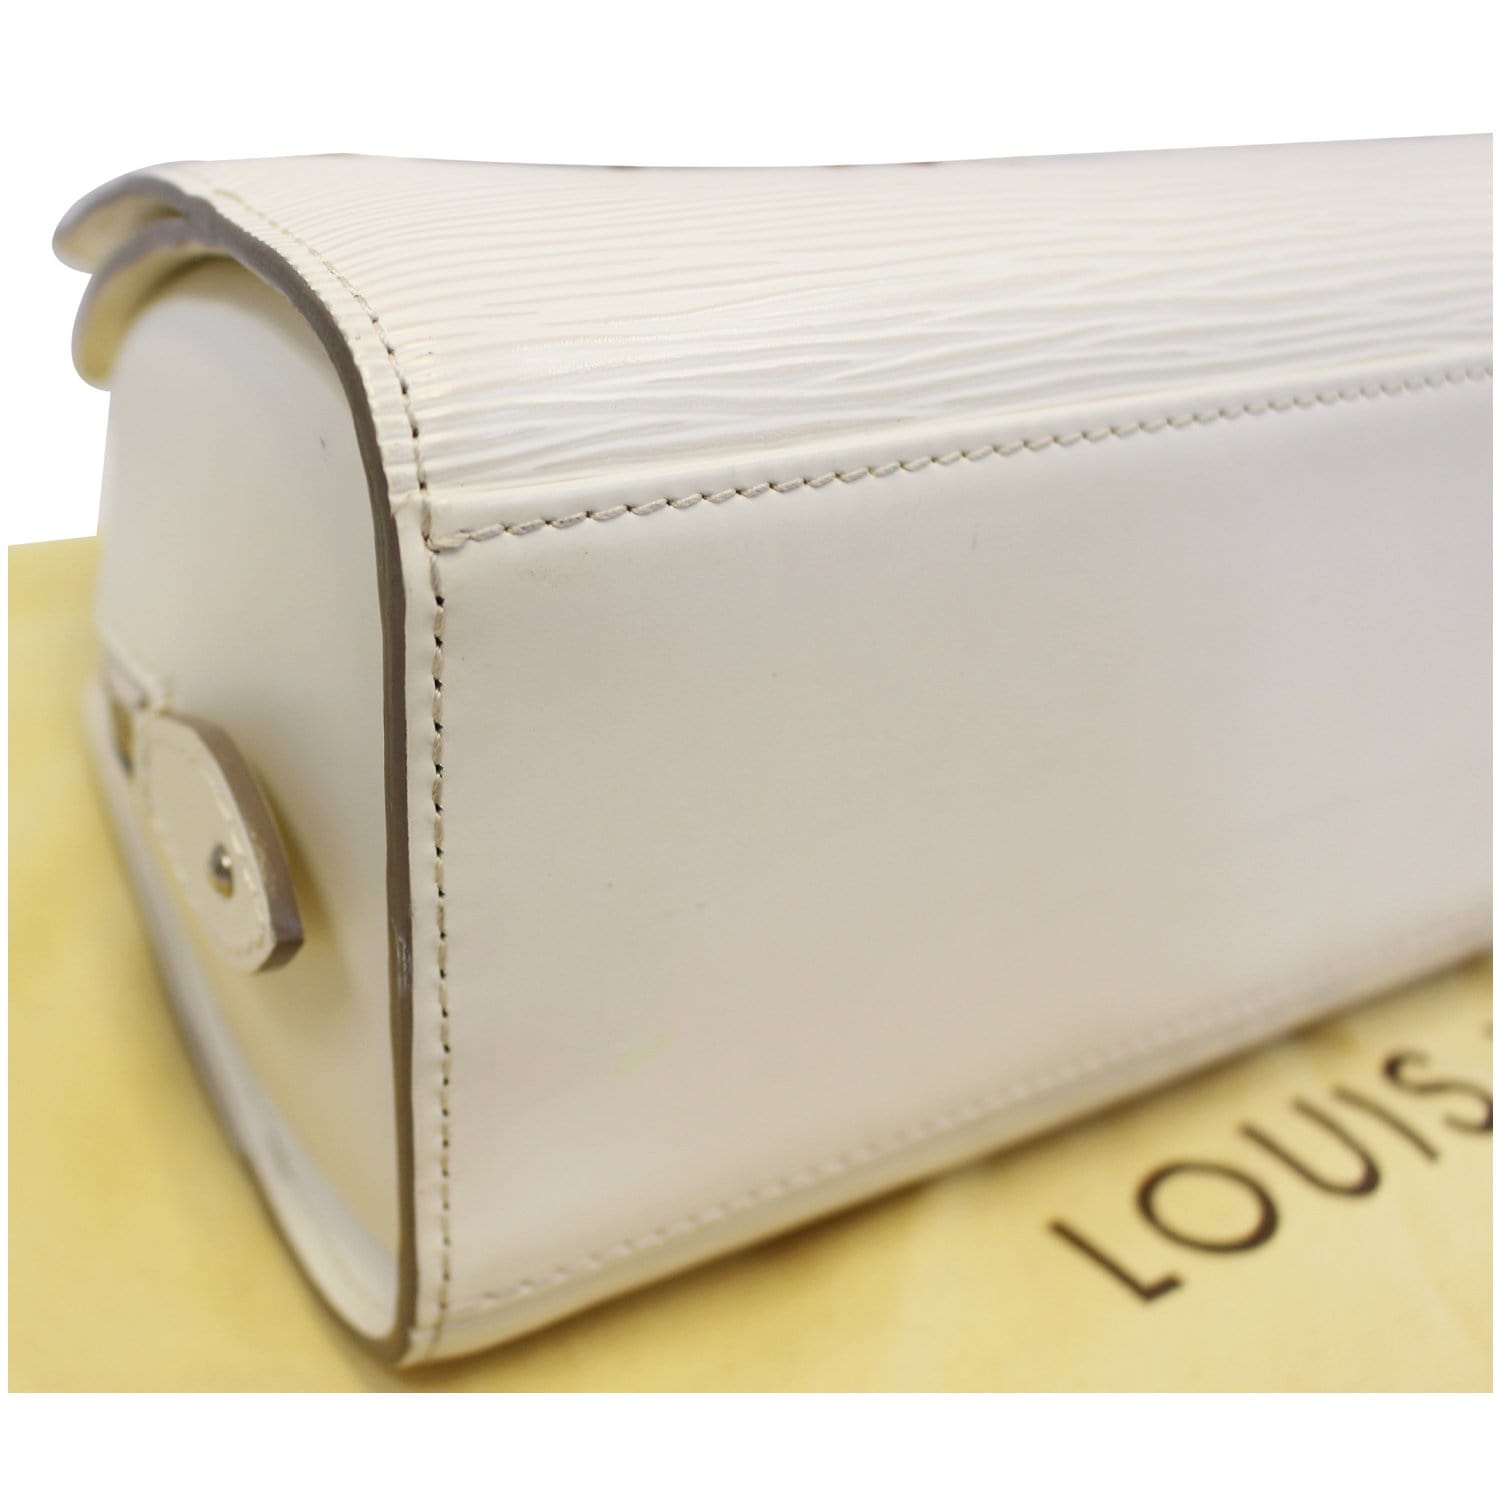 Louis Vuitton Pont Neuf Pm Handle Ivory Epi Leather Tote